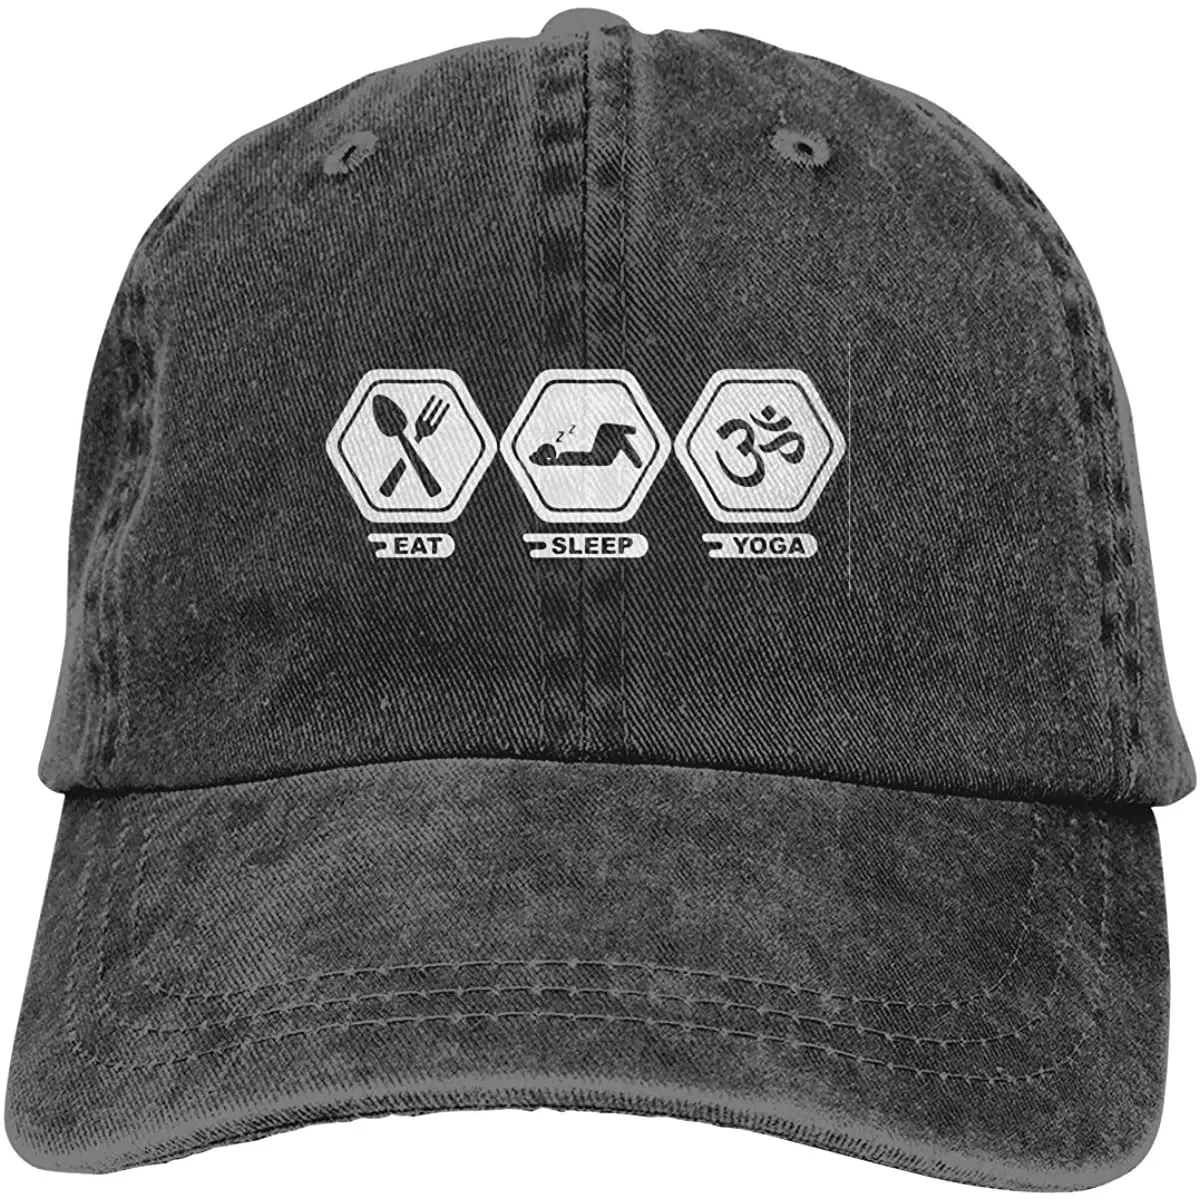 

Unisex Eat Sleep Yoga Vintage Washed Twill Baseball Caps Adjustable Hat Funny Humor Irony Graphics Of Adult Gift Black